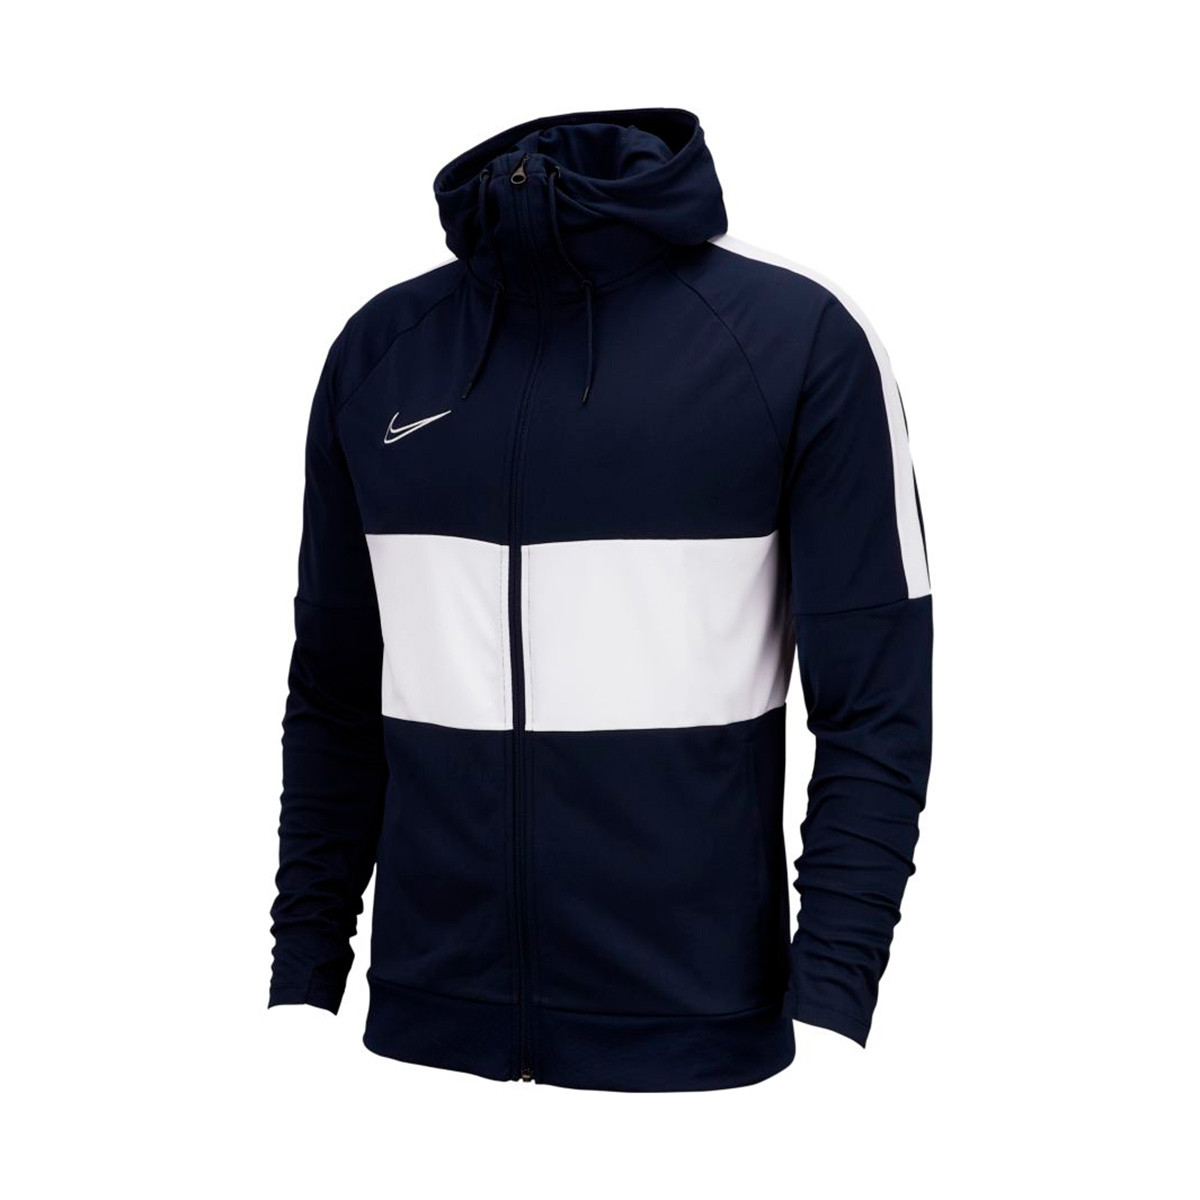 Jacket Nike Dry Academy Hoodie I96 